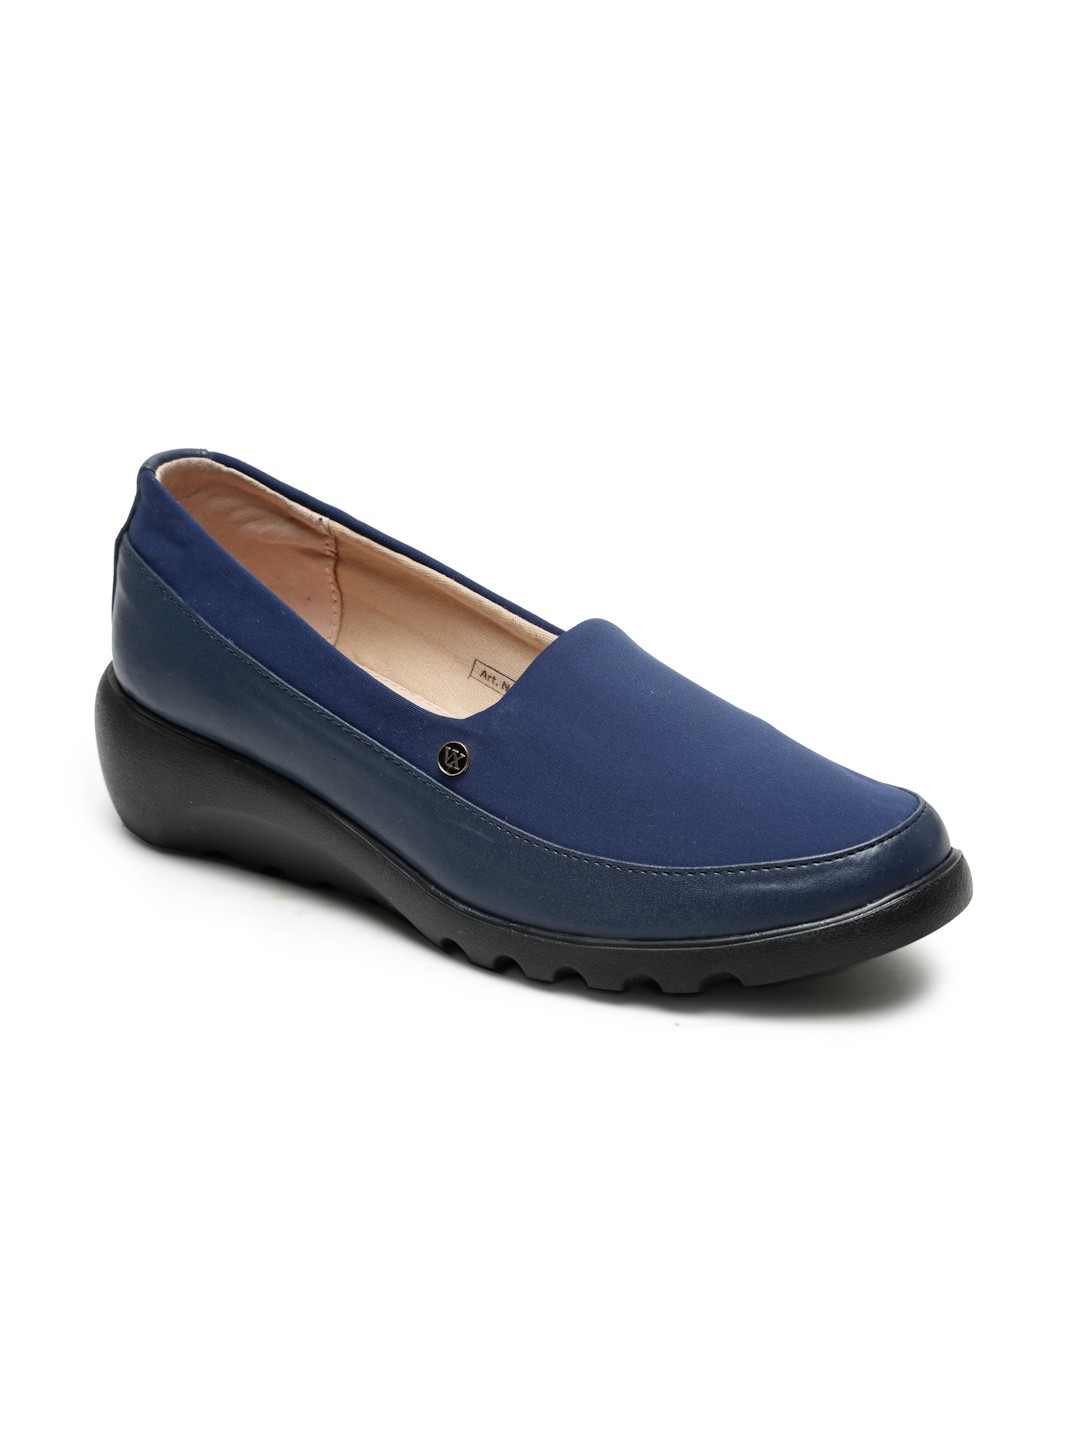 Buy Von Wellx Germany Comfort Women's Blue Casual Shoes Elsa Online in Gurgaon